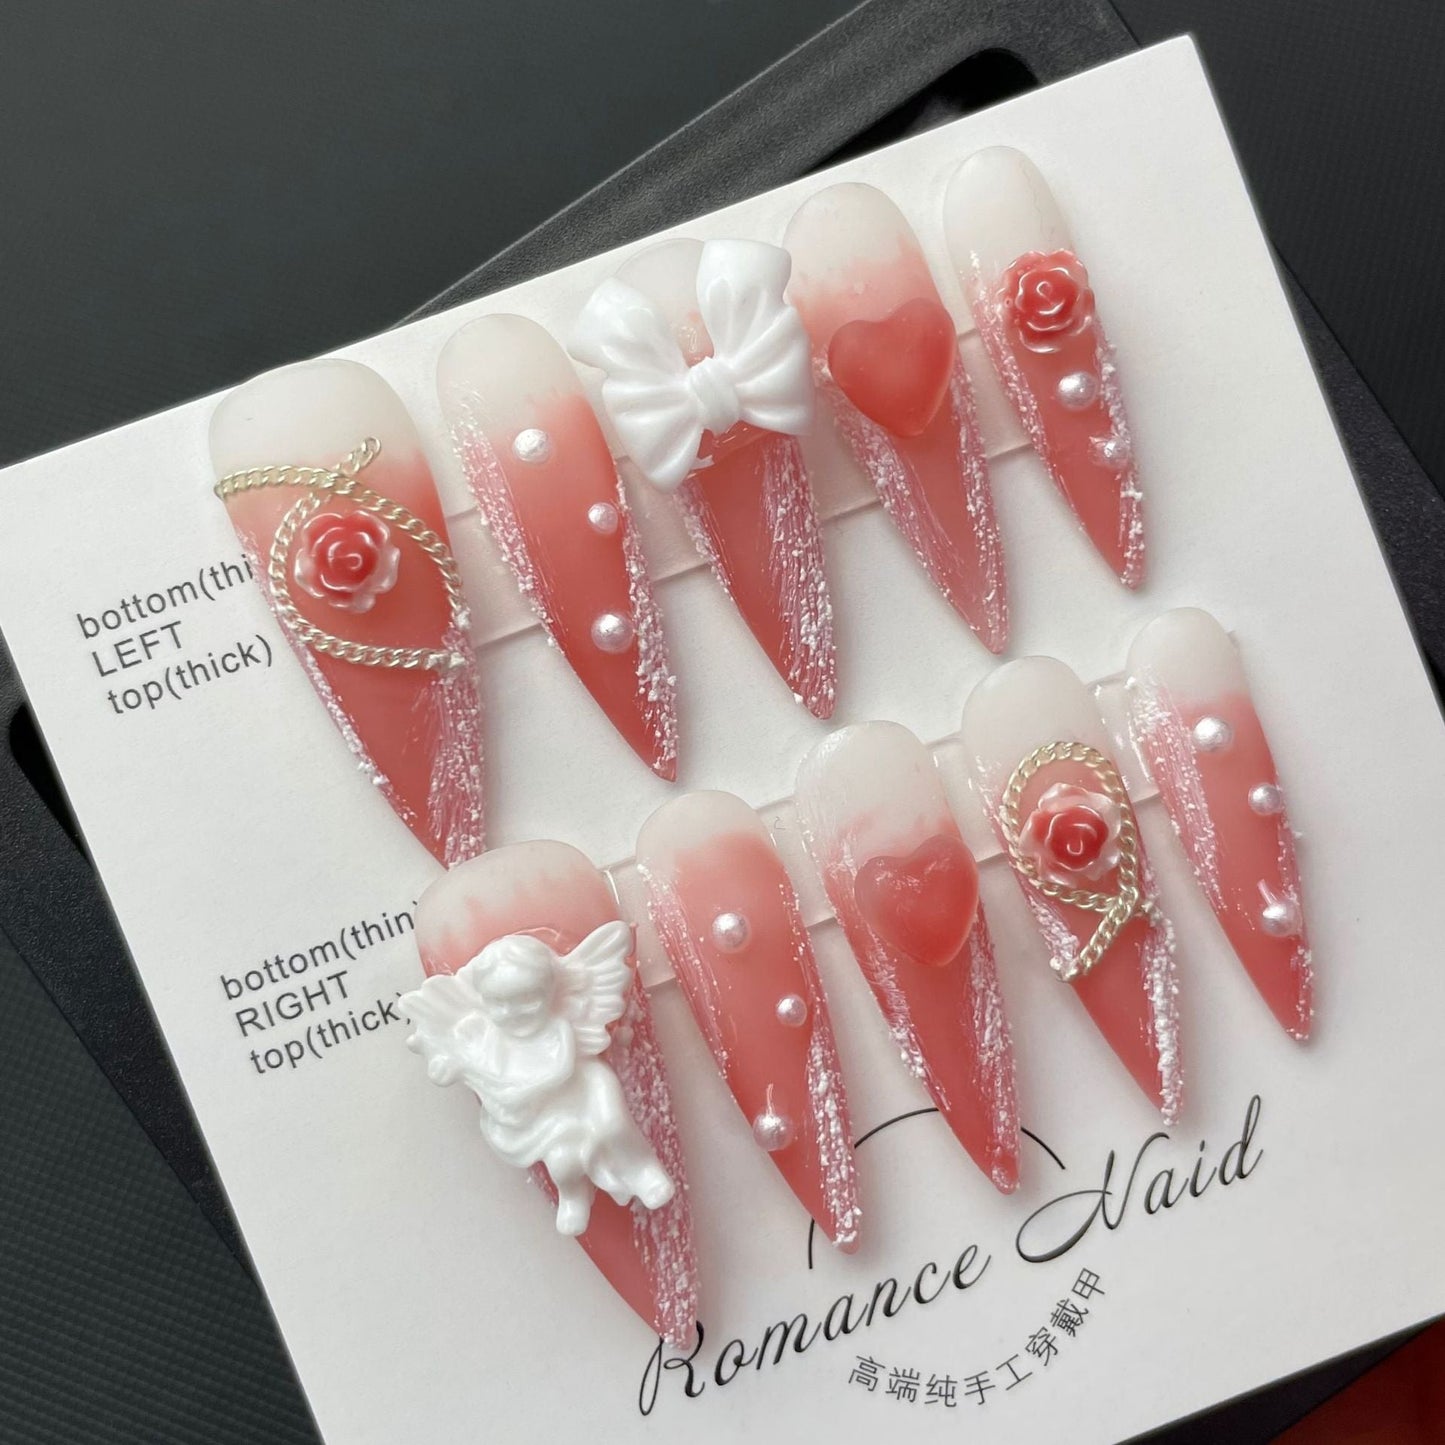 634 Rose Angel press on nagels 100% handgemaakte kunstnagels roze